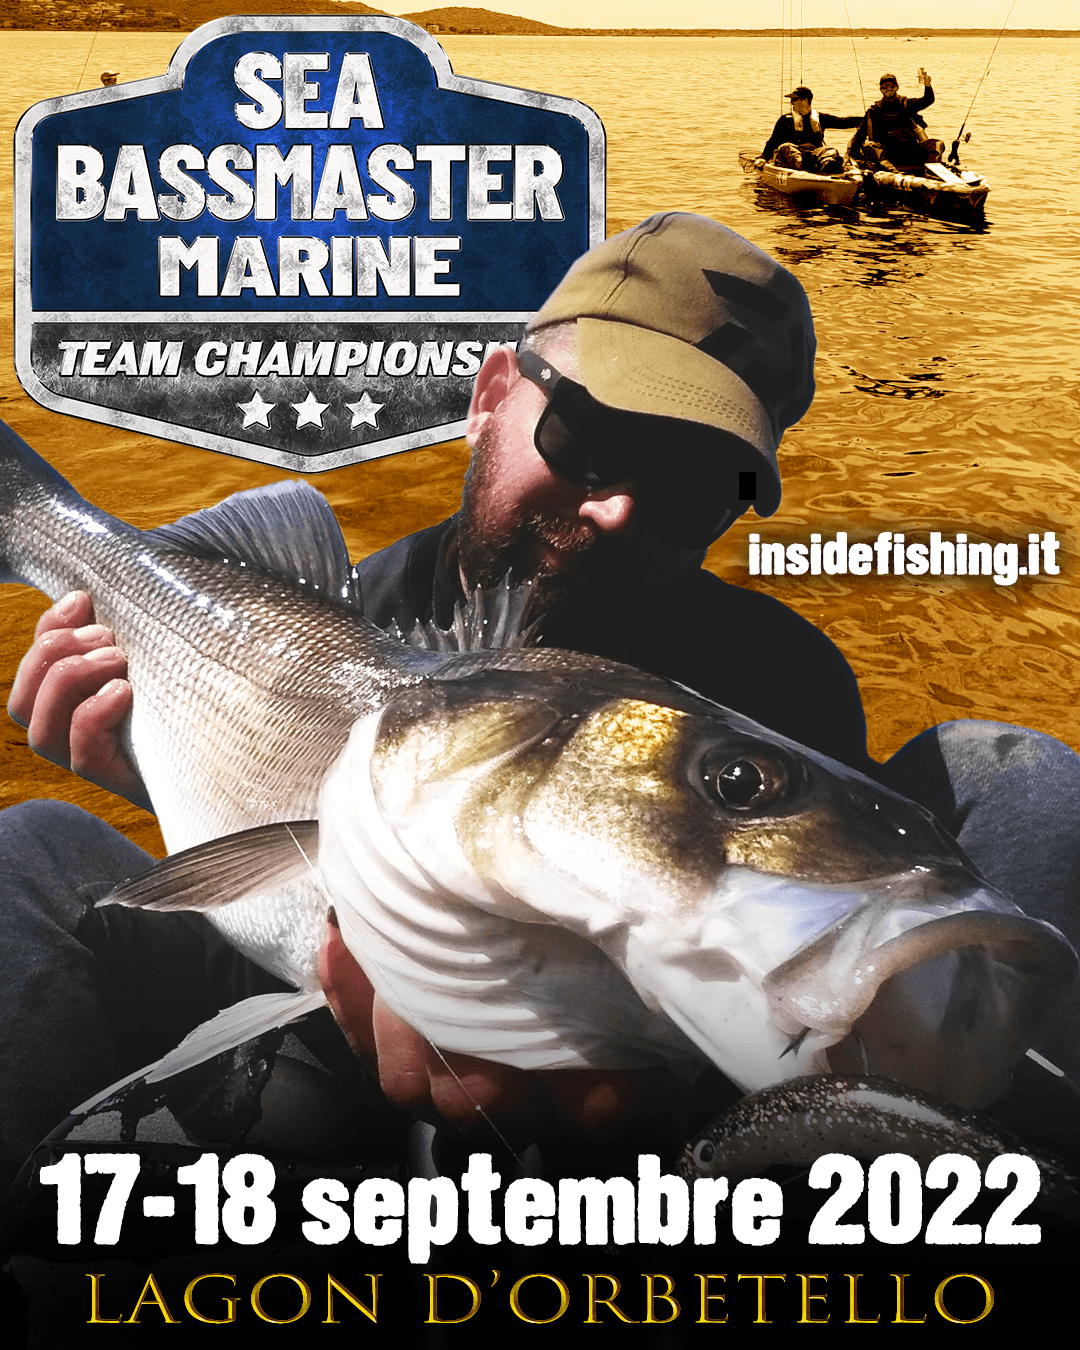 Sea Bassmaster Marine Team Championship